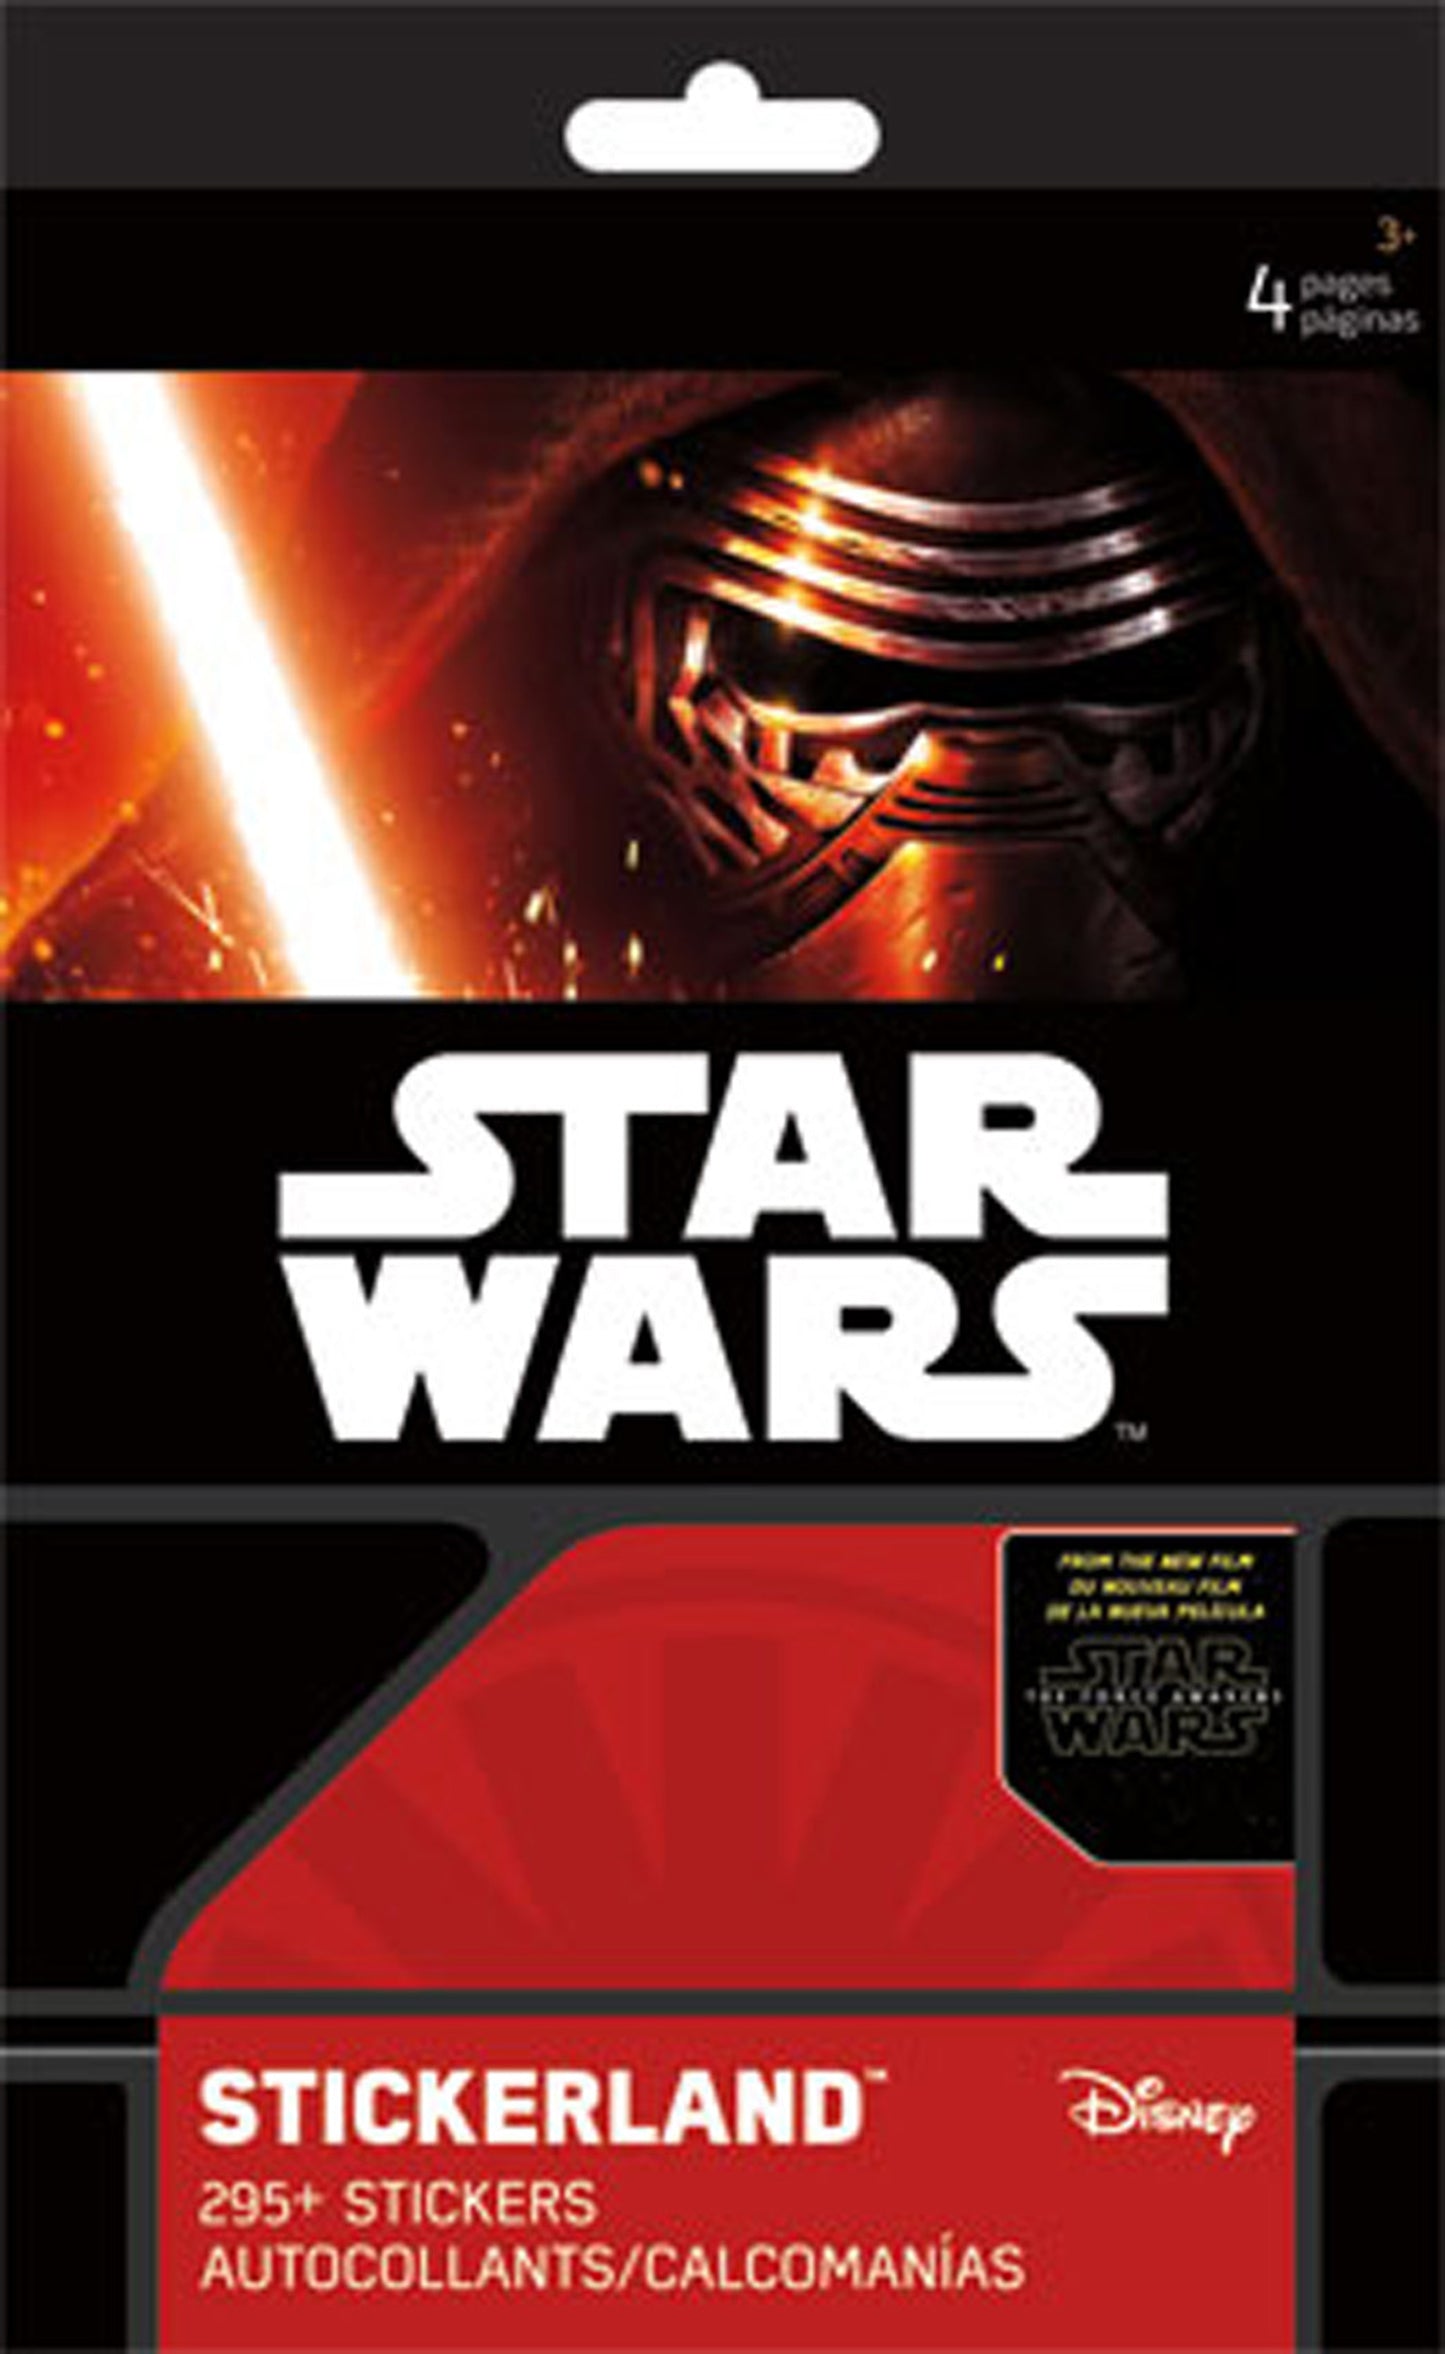 Star Wars - The force Awakens Sticker Book